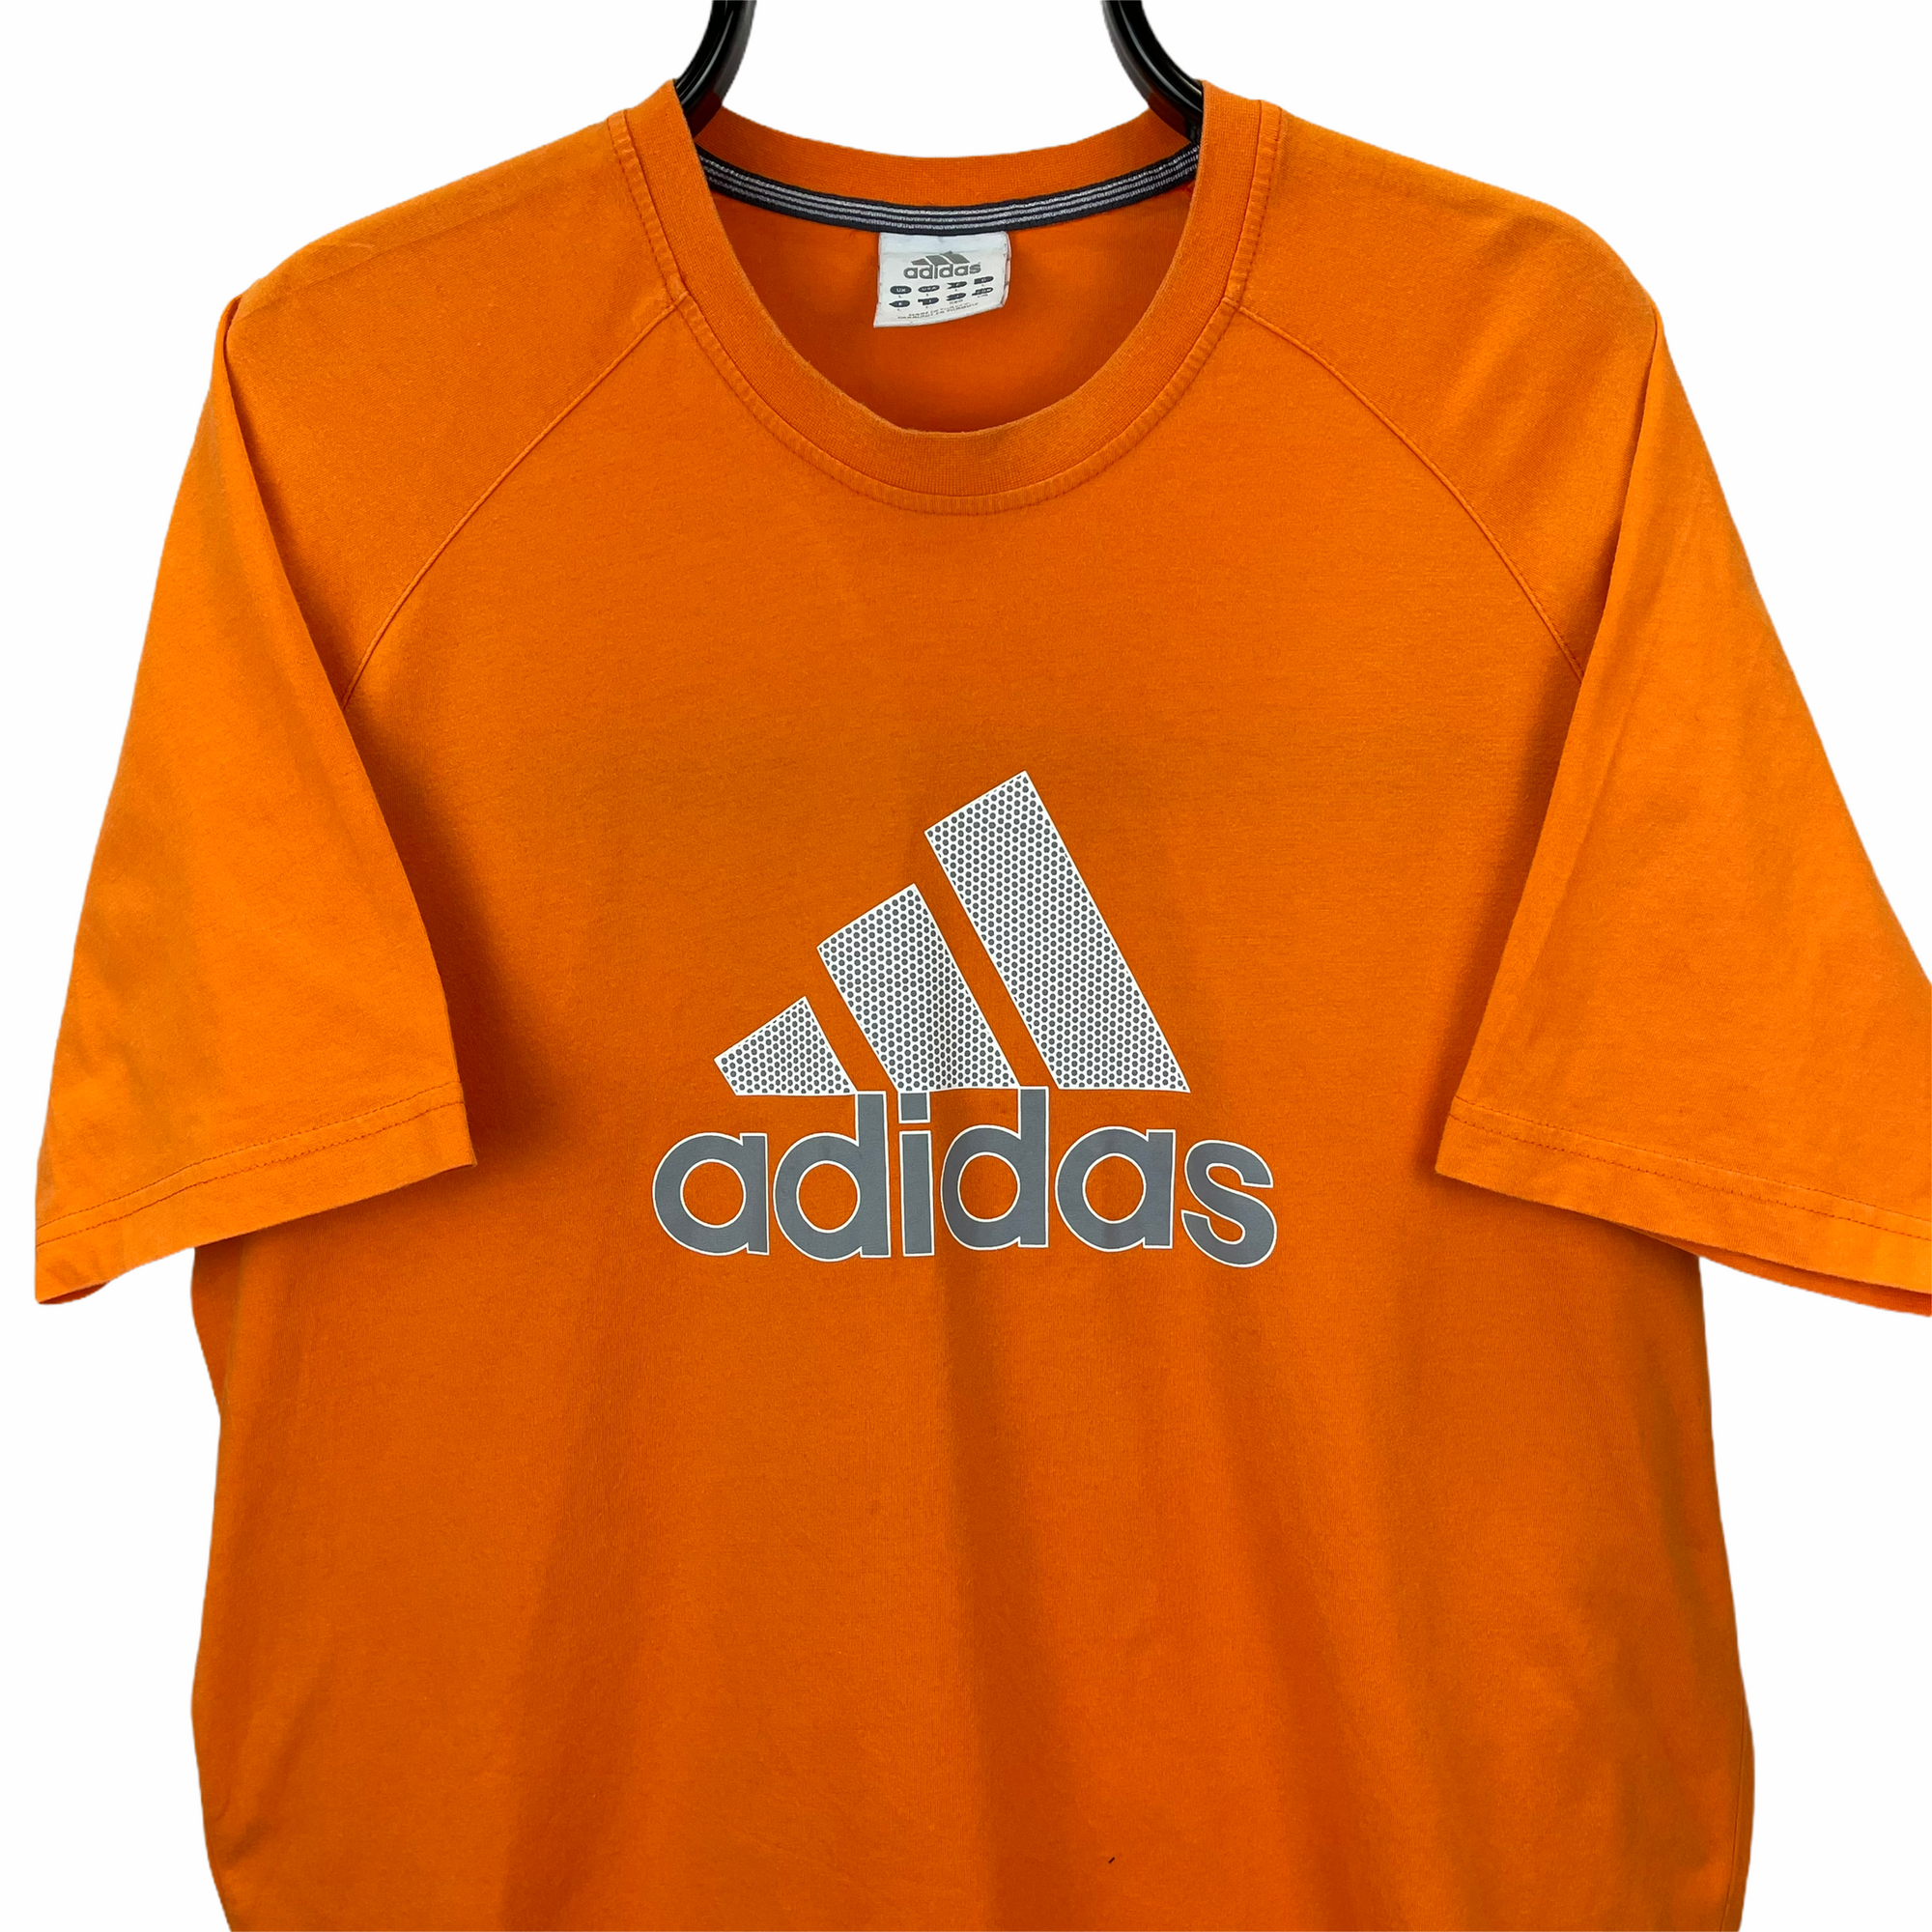 Vintage Adidas Spellout Tee in Orange - Men's Large/Women's XL